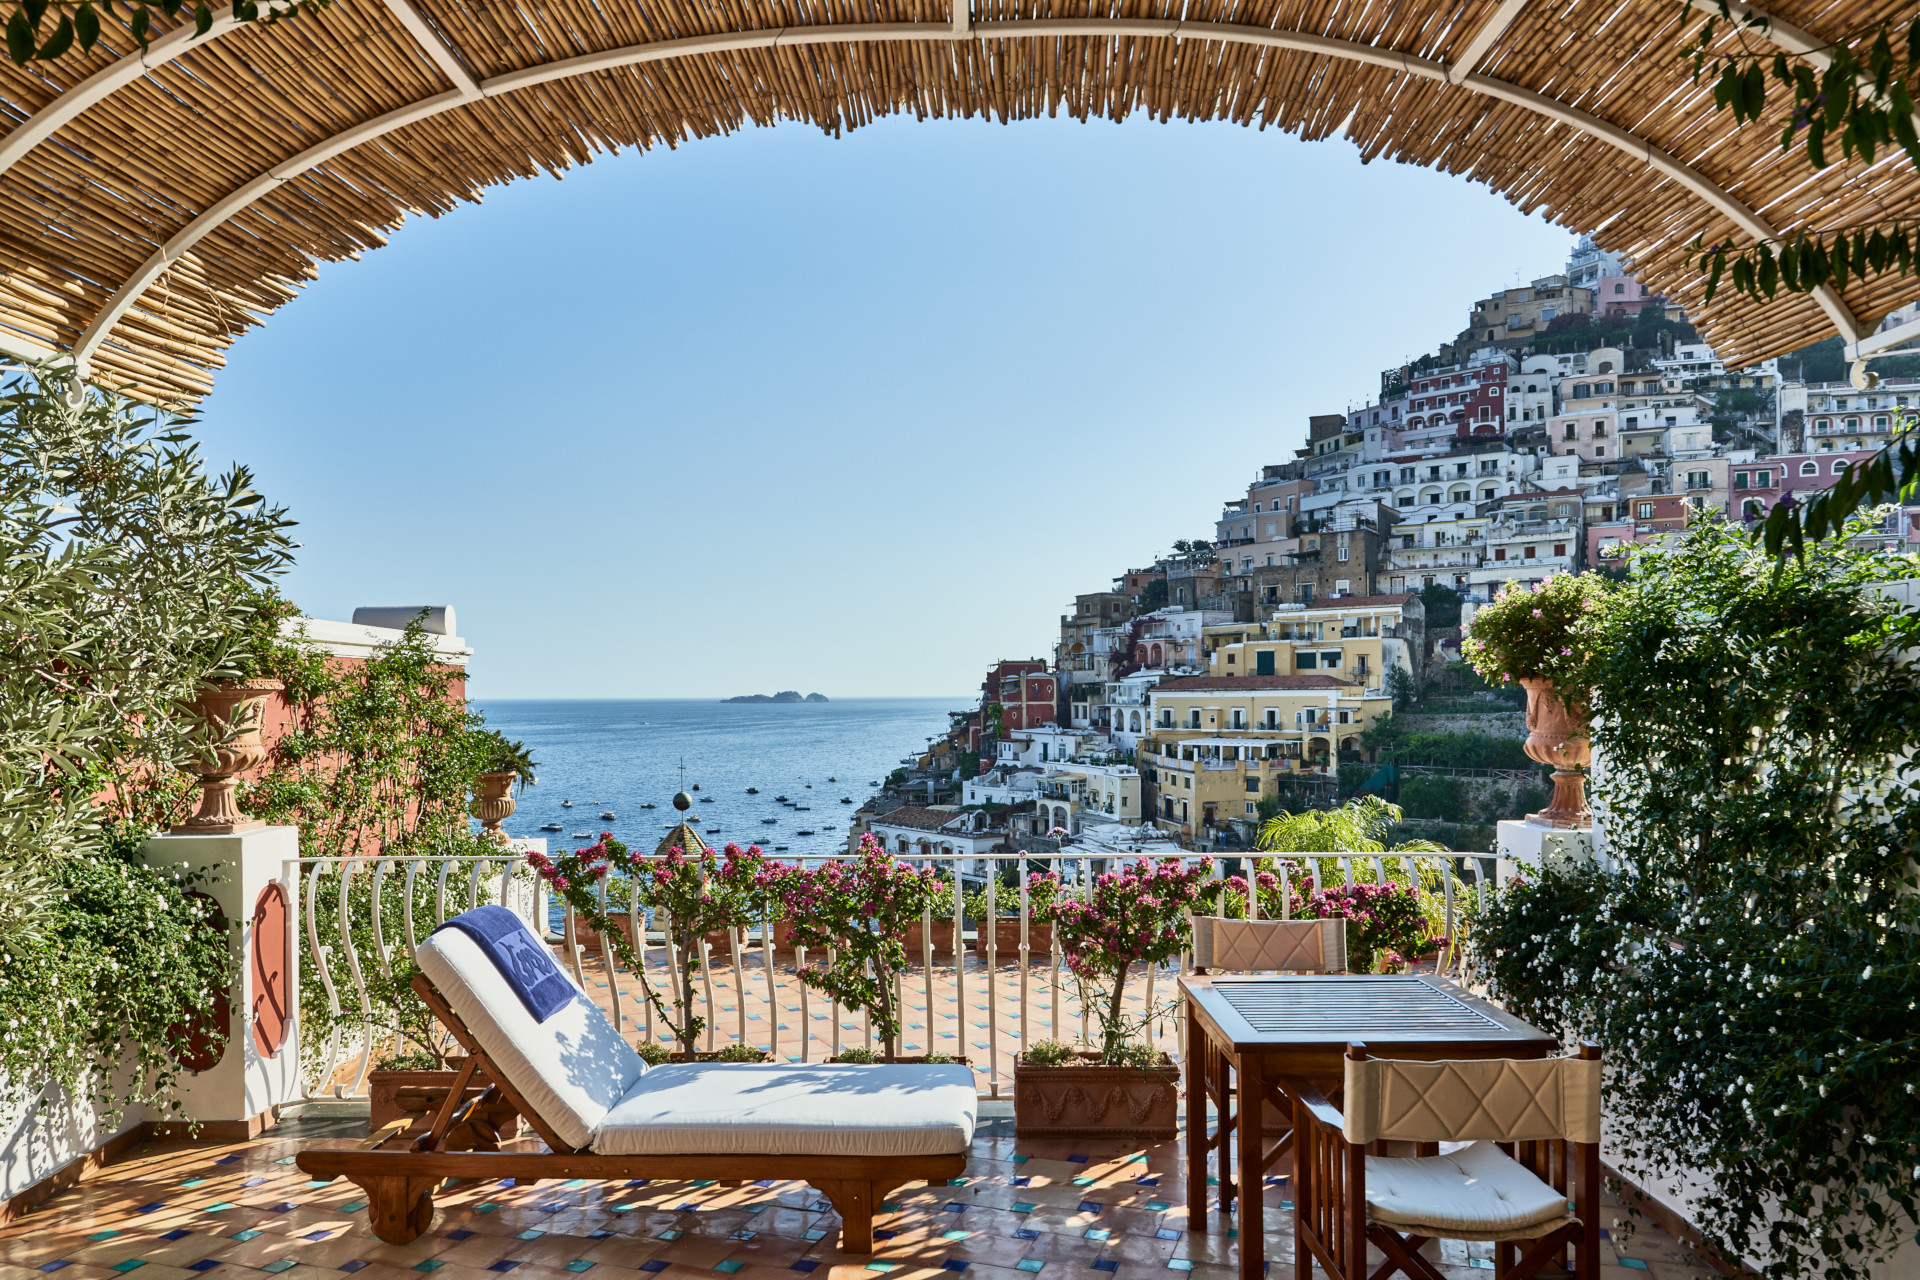 The C&TH Guide To The Amalfi Coast